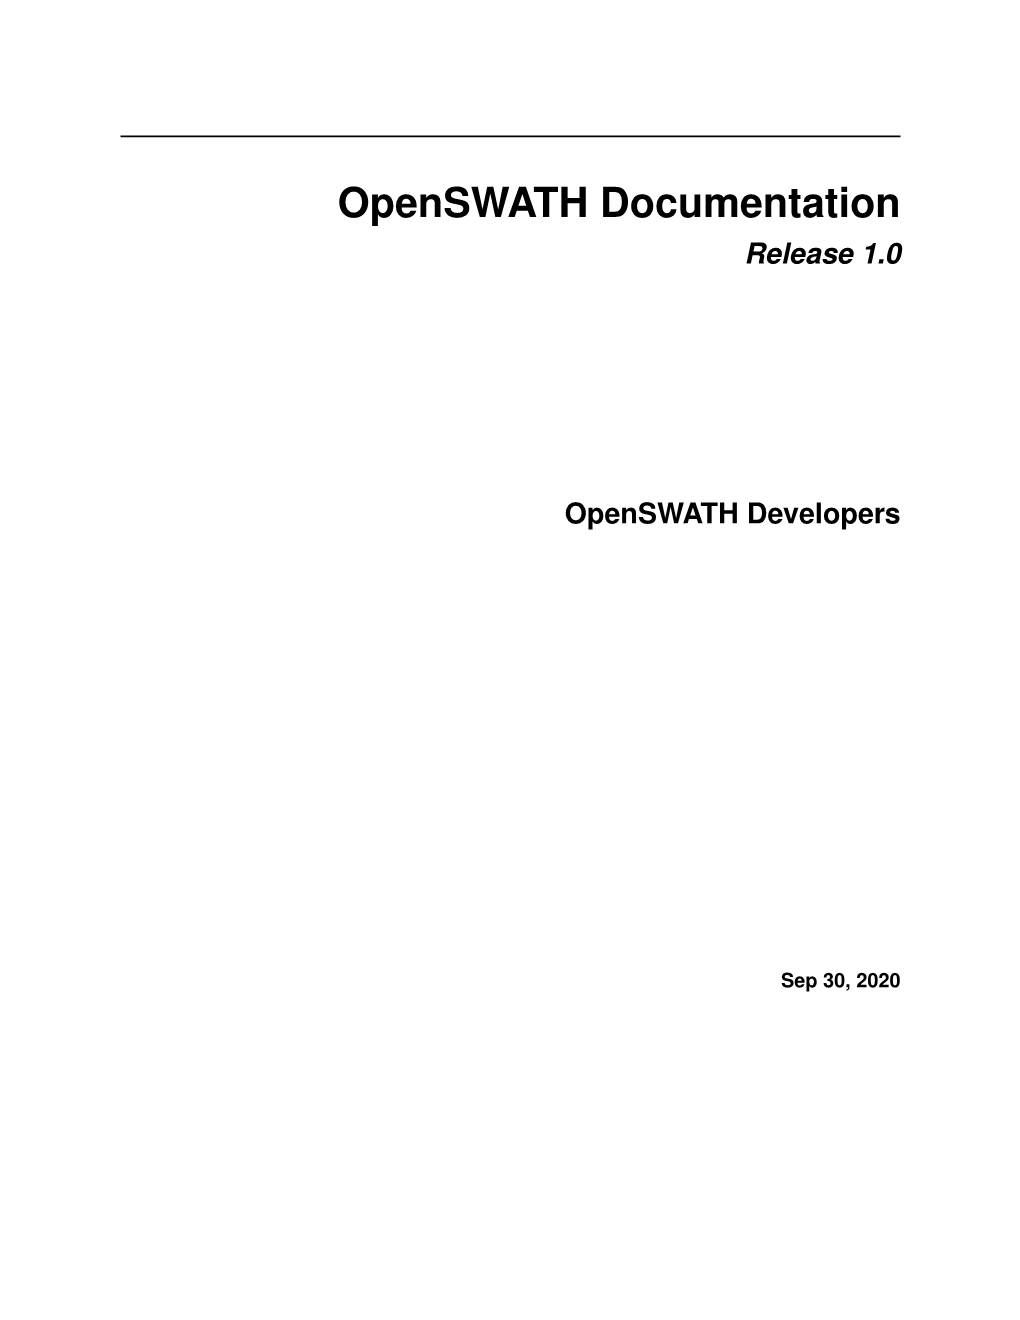 Openswath Documentation Release 1.0